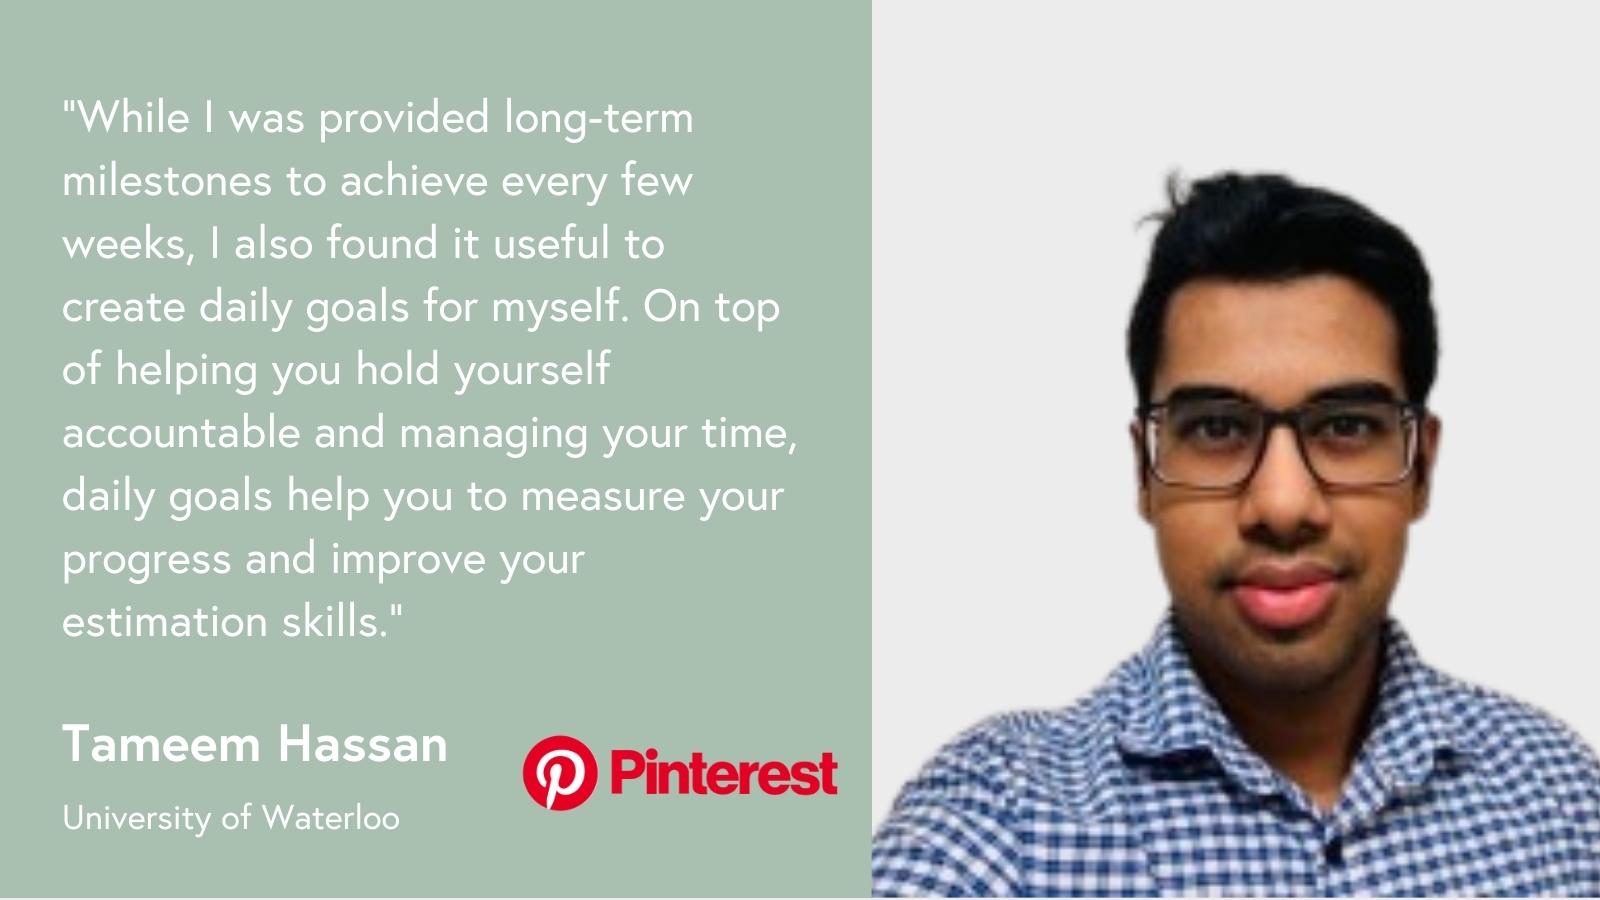 Tameem Hassan - Software Engineering Intern at Pinterest